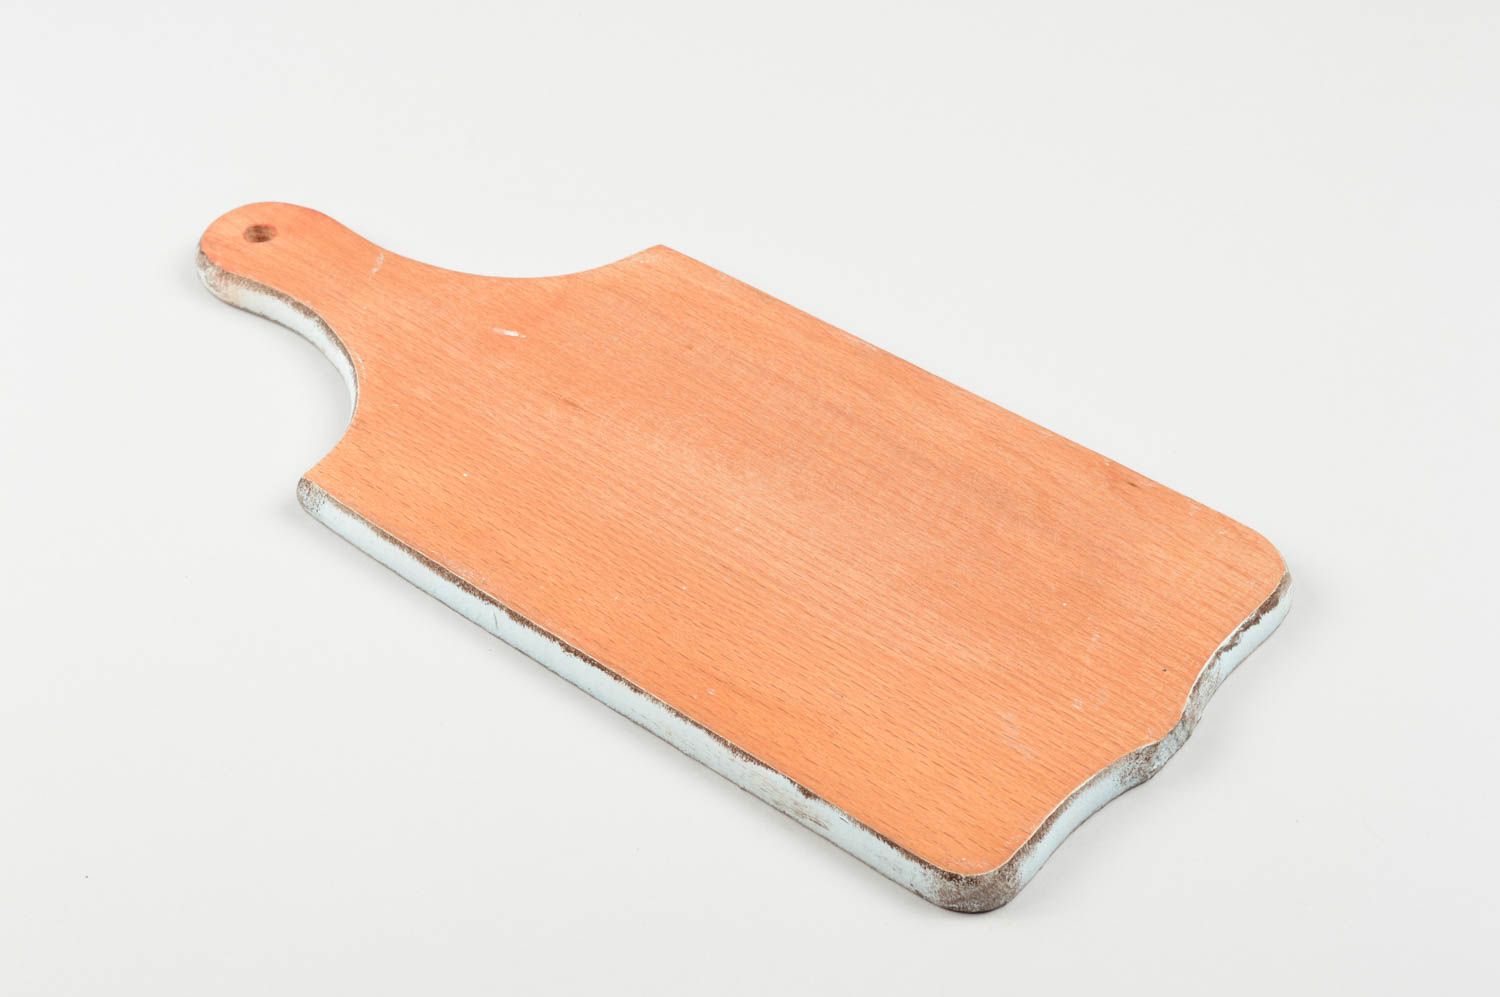 Handmade cutting board wooden board for kitchen decor ideas wooden utensils photo 3